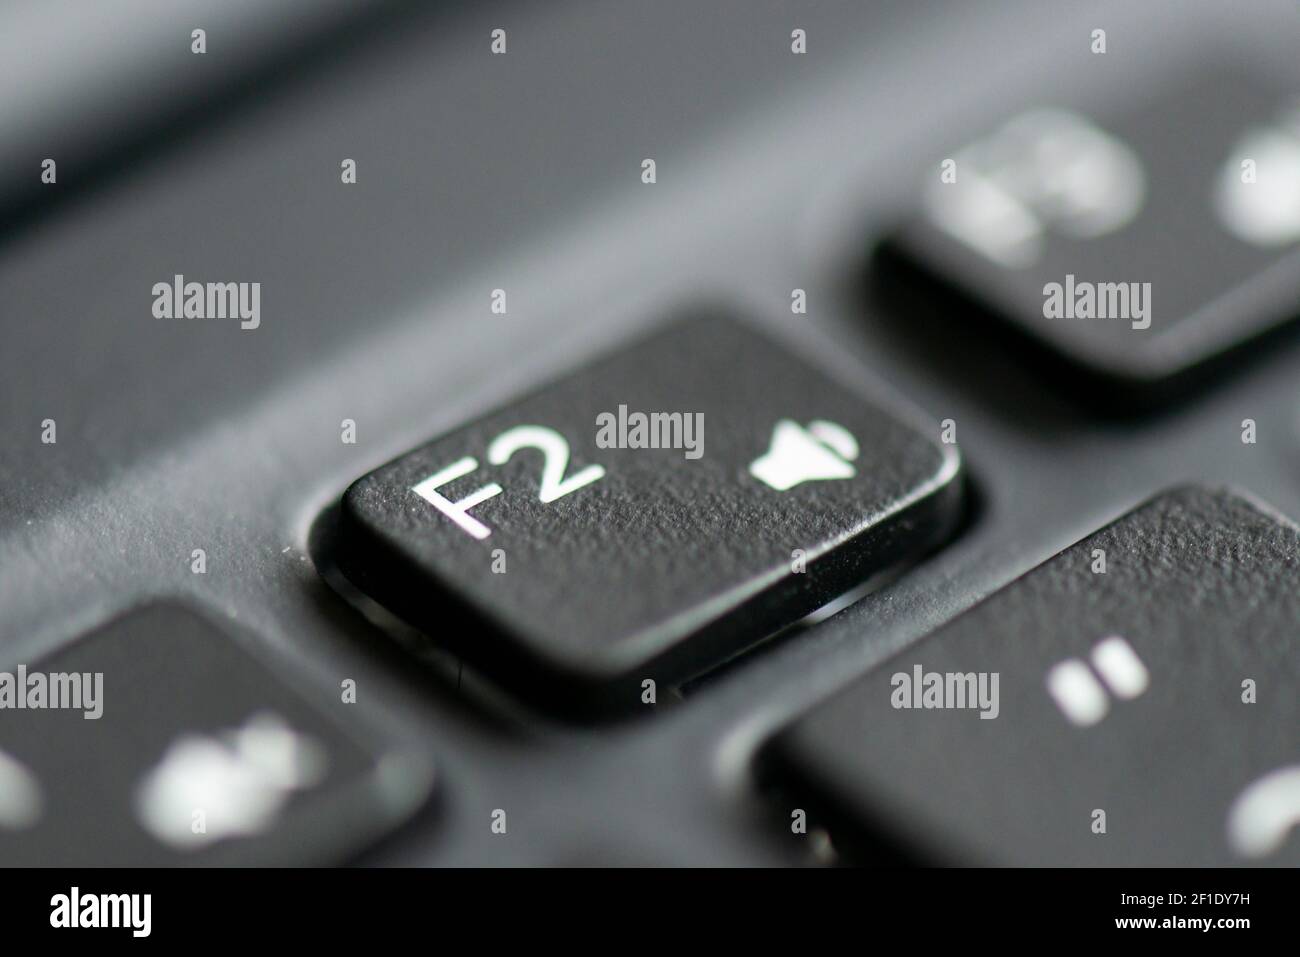 F2 and decrease volume key on a laptop keyboard Stock Photo - Alamy